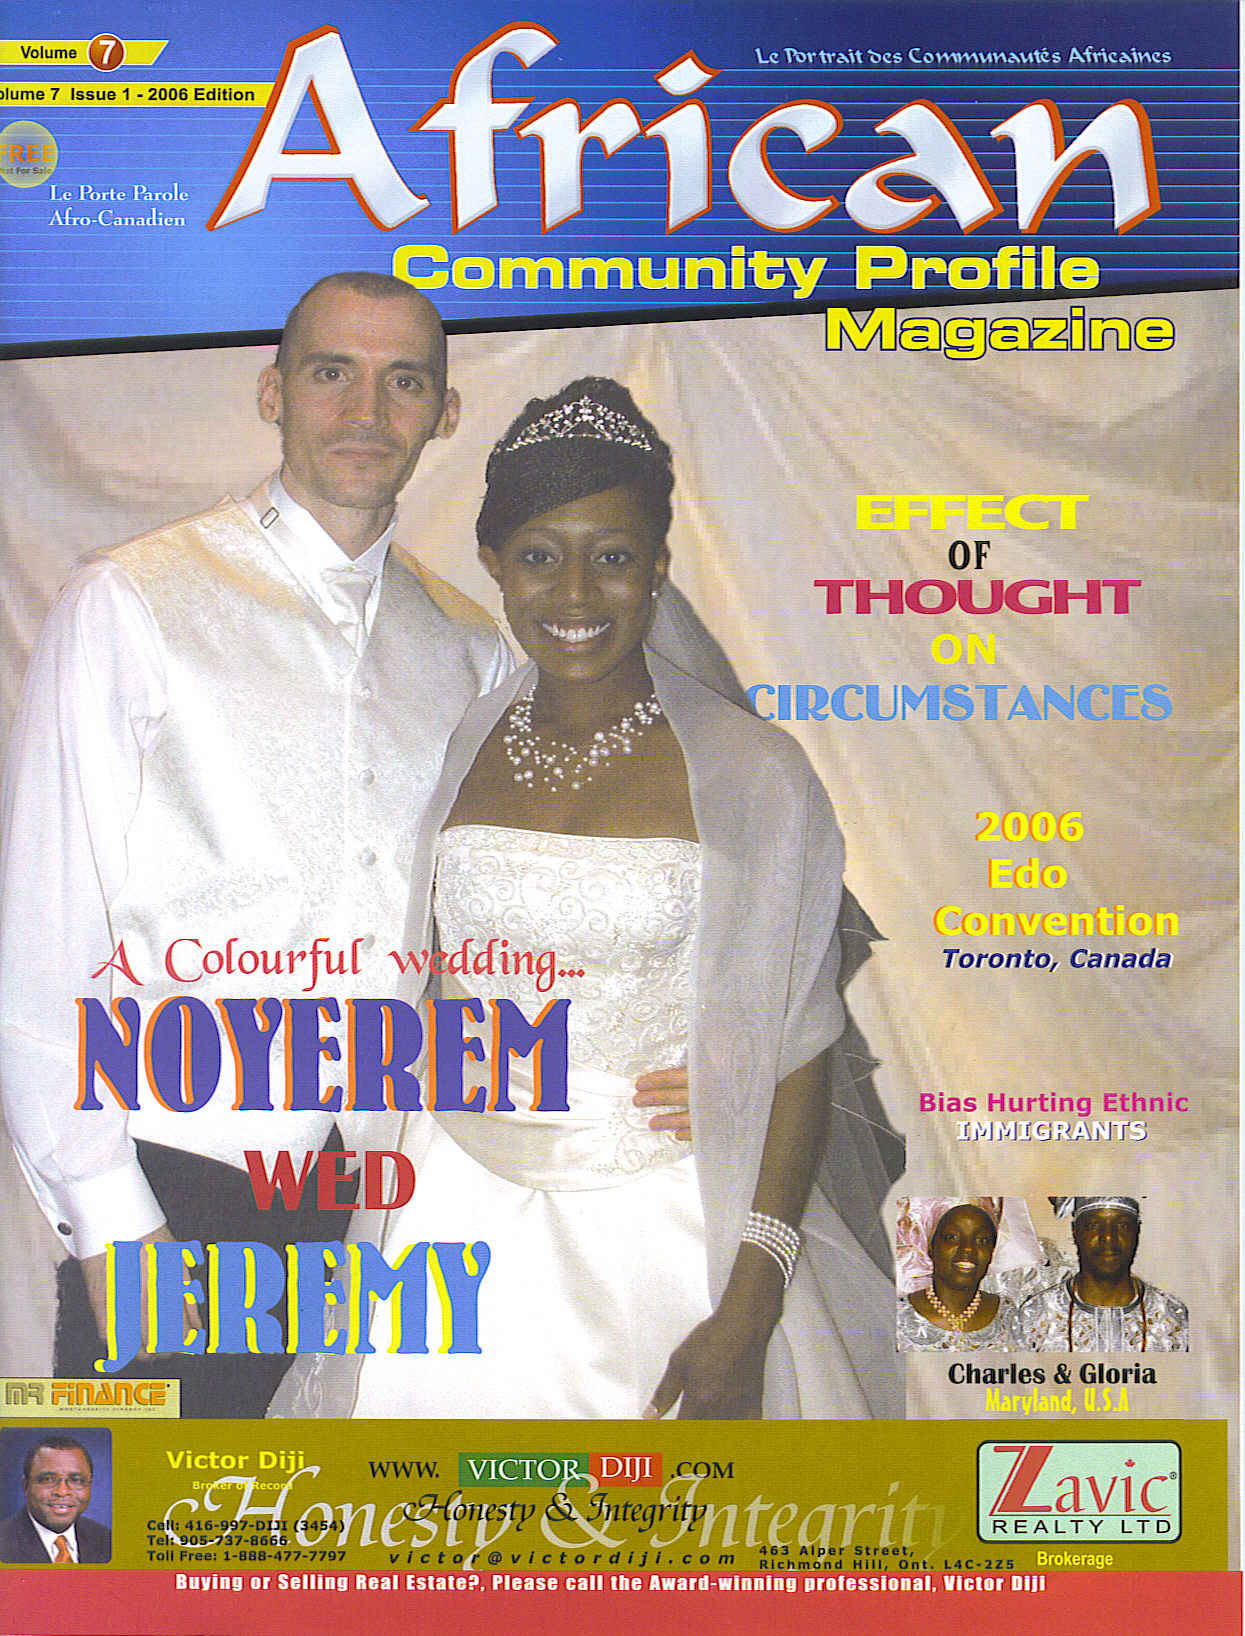 vol-7-issue-1-2006.jpg